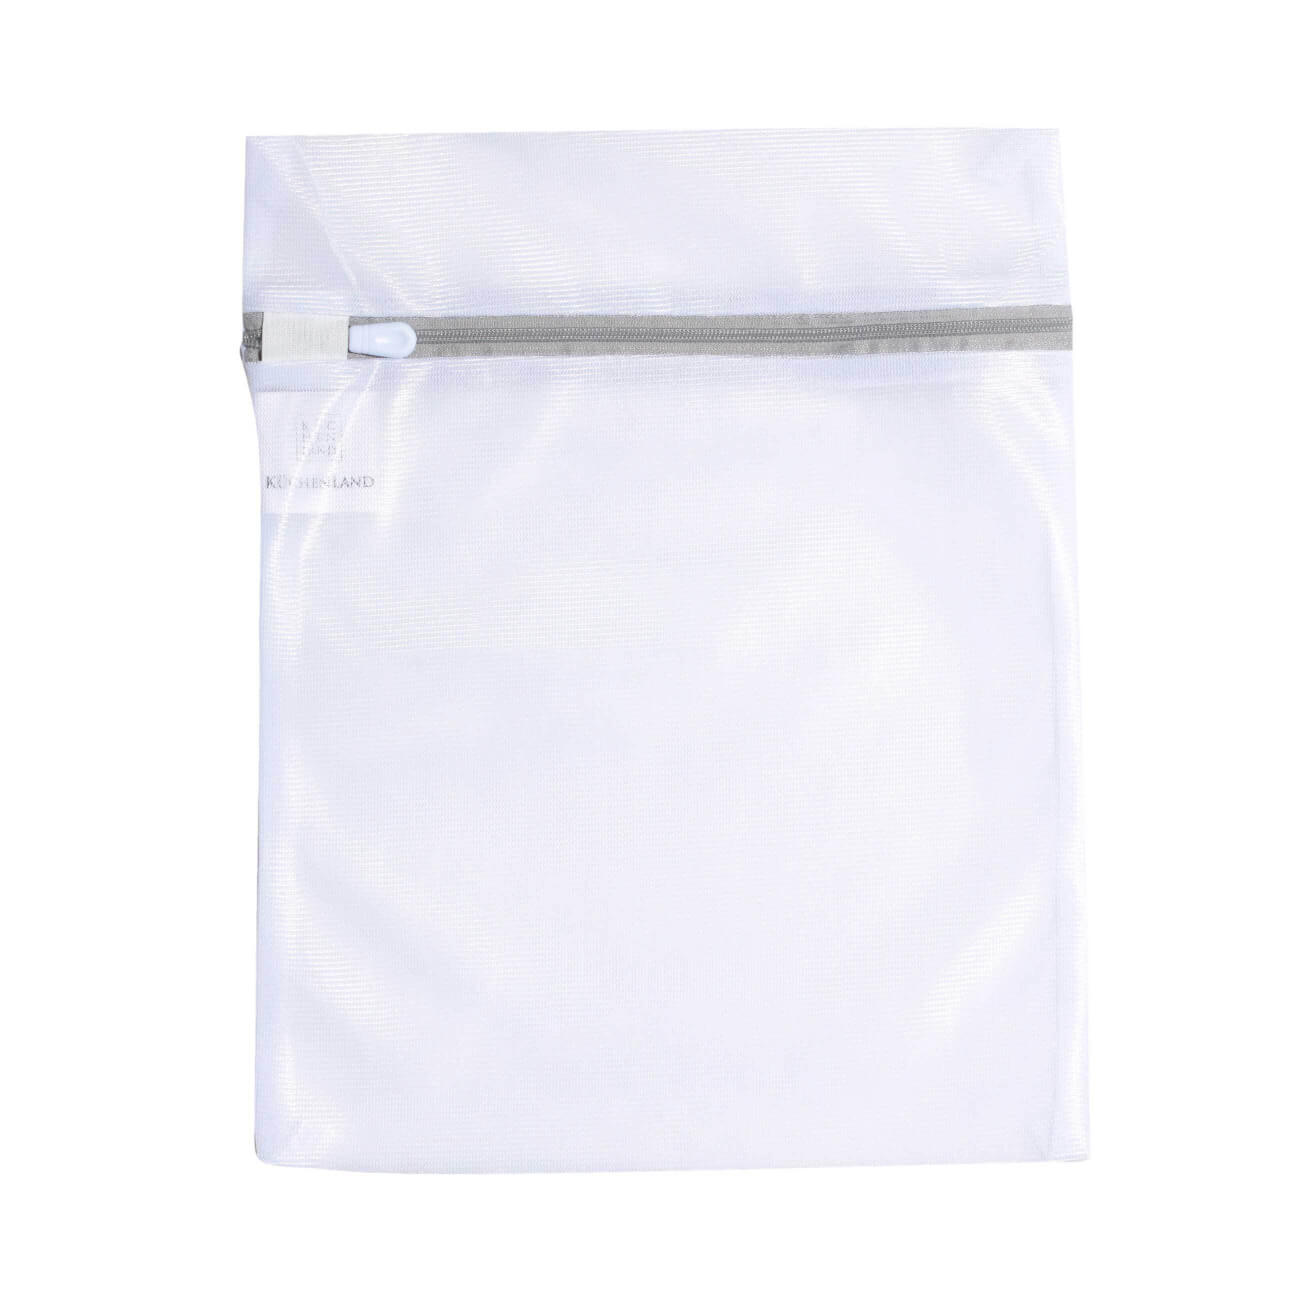 Underwear washing bag, 25x30 cm, polyester, white-gray, Safety plus изображение № 1